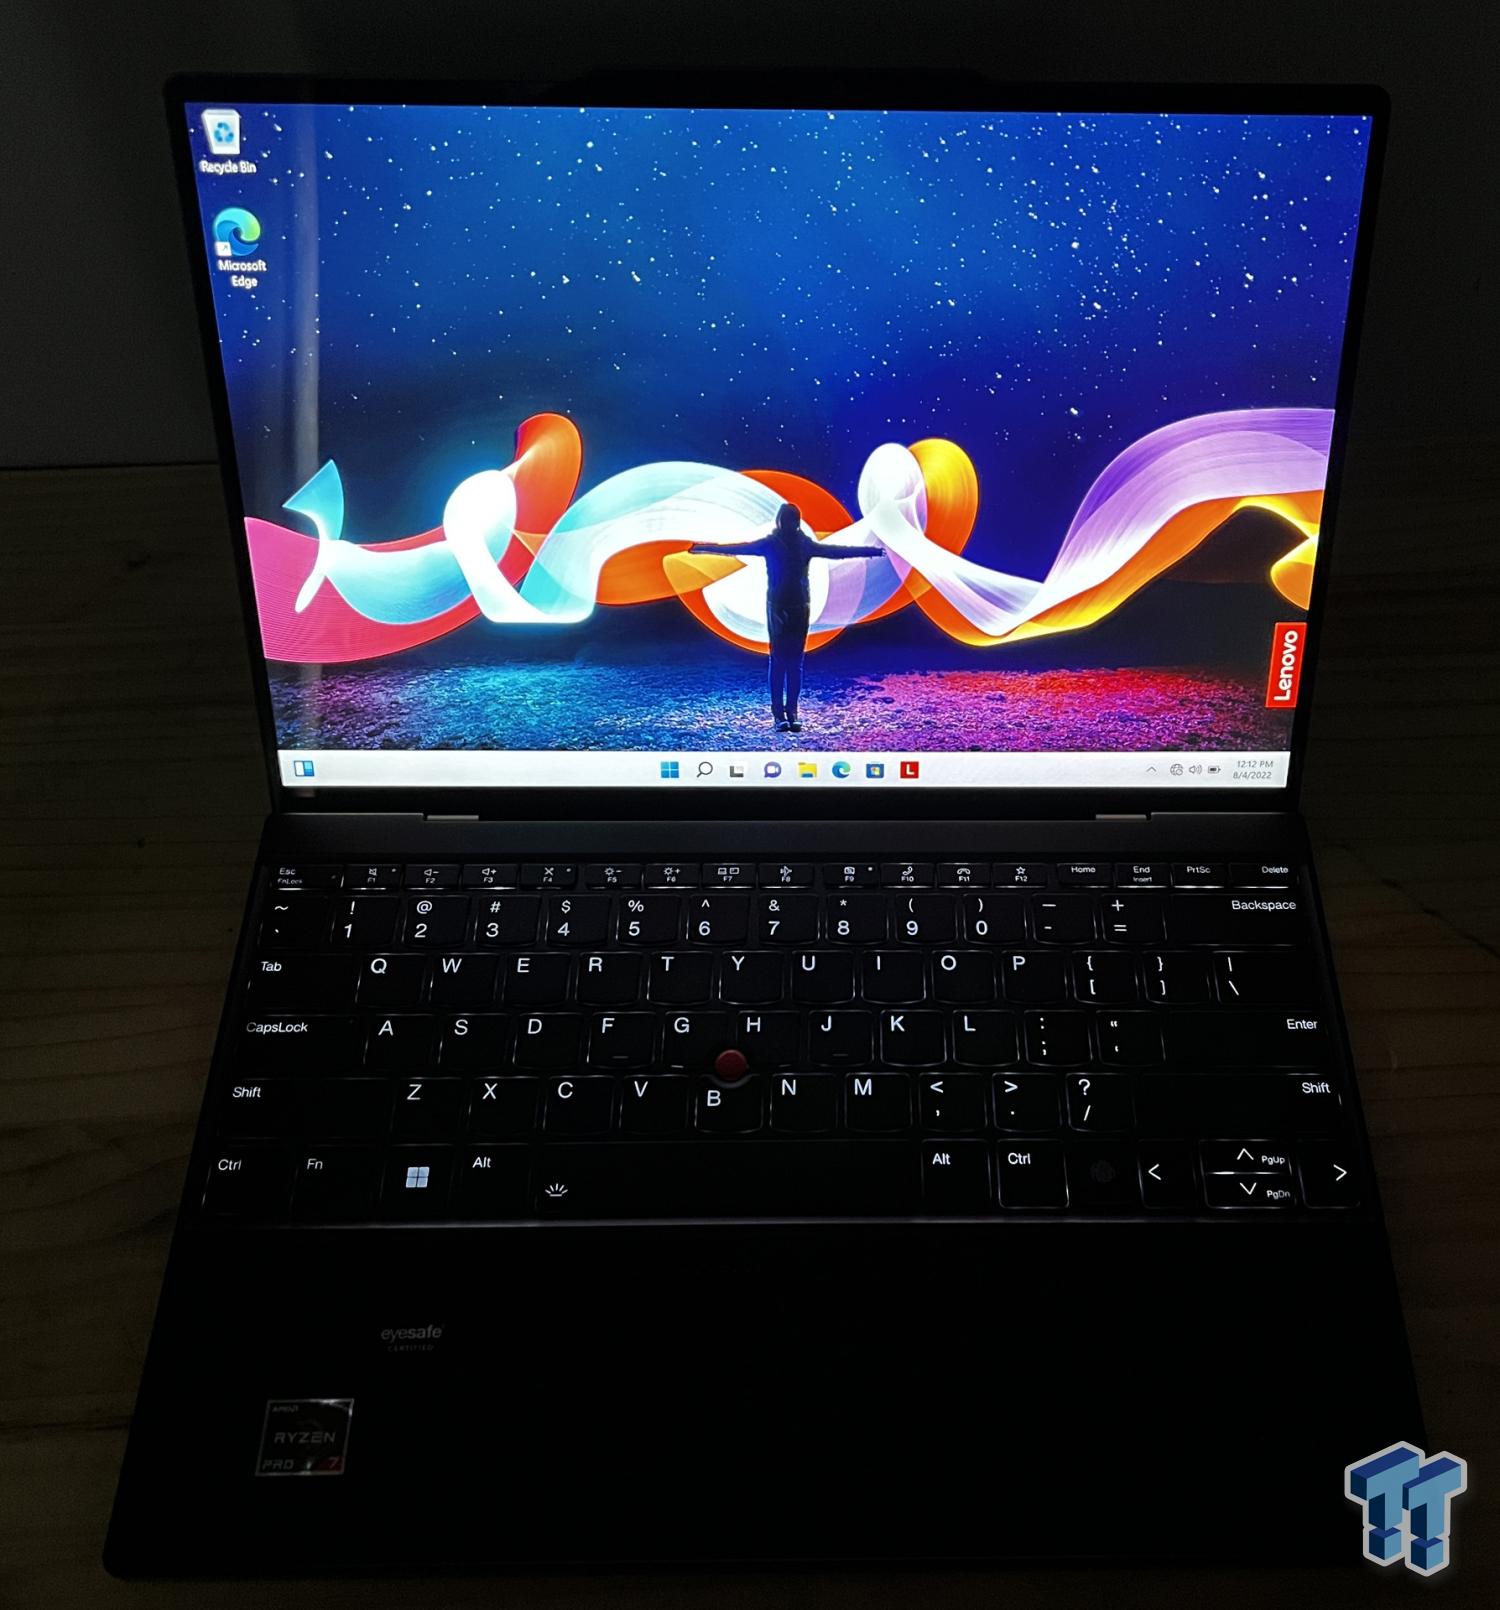 Lenovo ThinkPad Z13 AMD Ryzen Pro-powered Laptop Review